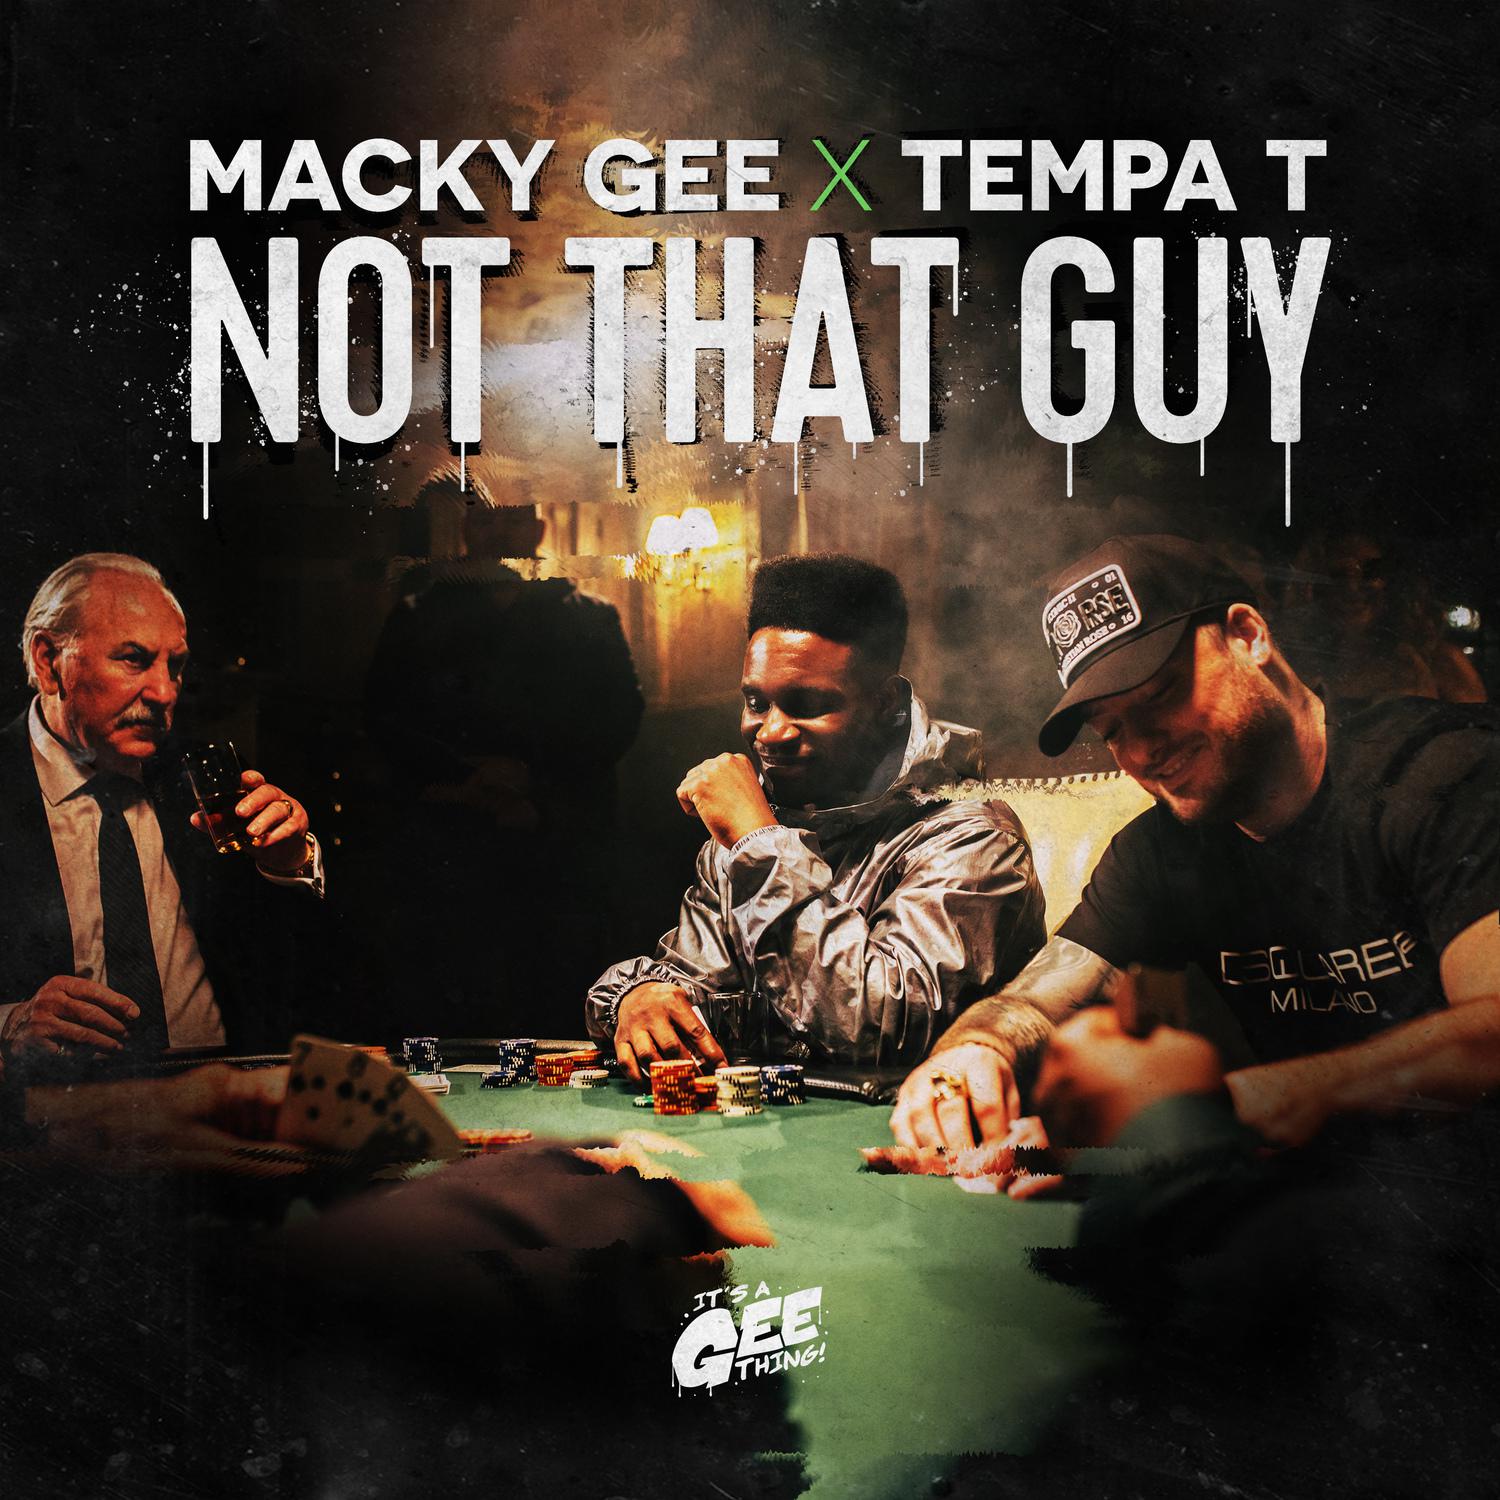 Macky Gee x Tempa T - Not That Guy